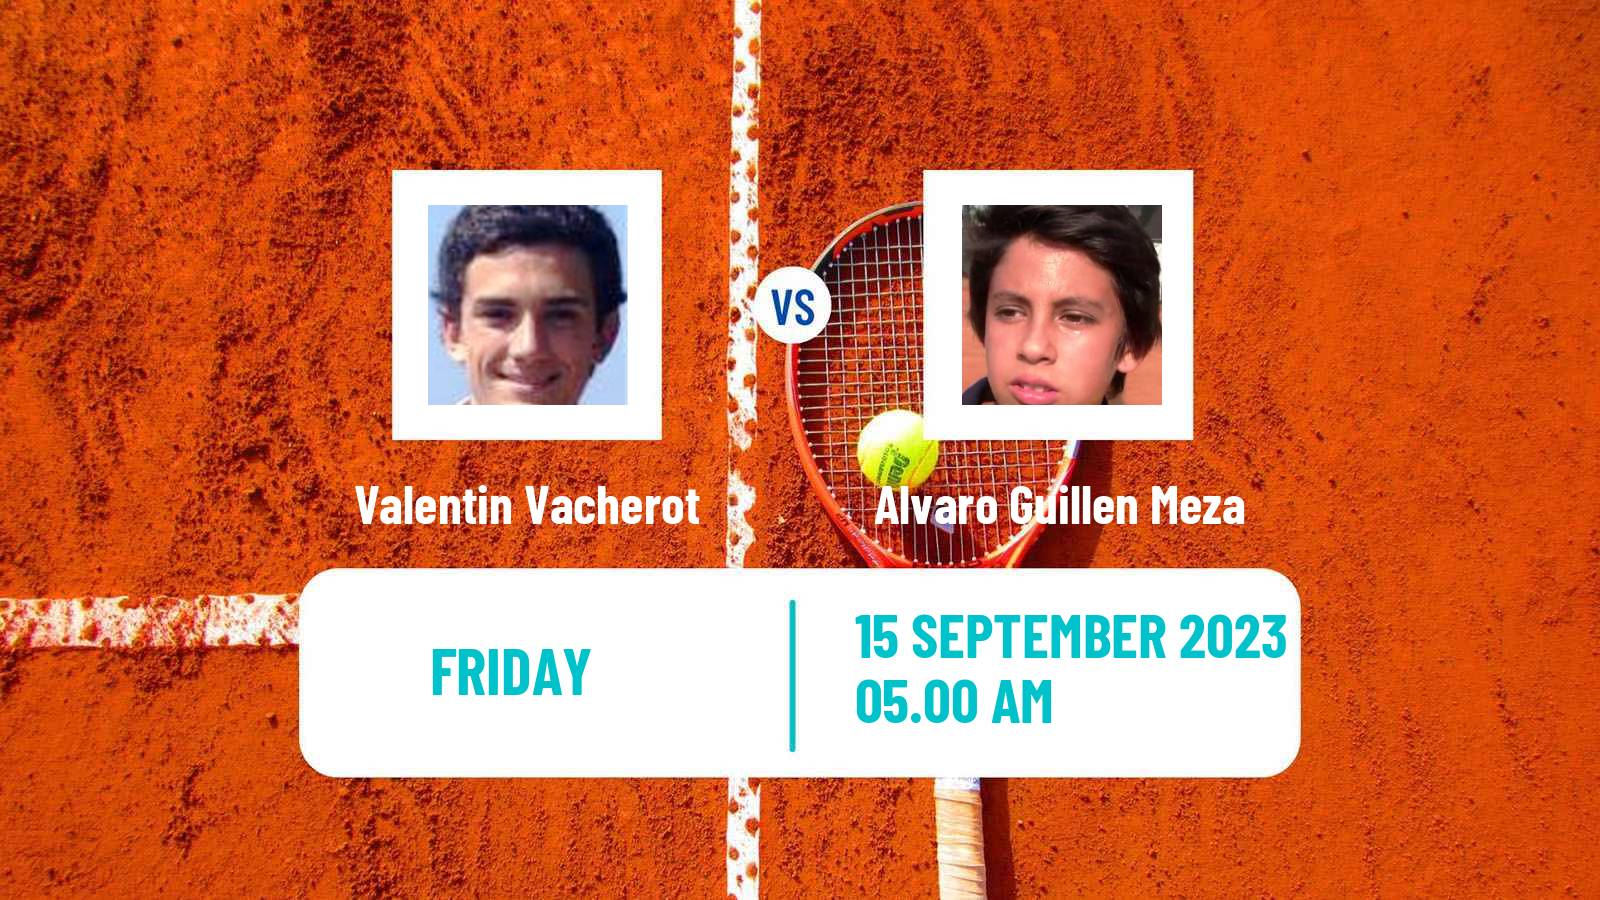 Tennis Davis Cup World Group II Valentin Vacherot - Alvaro Guillen Meza